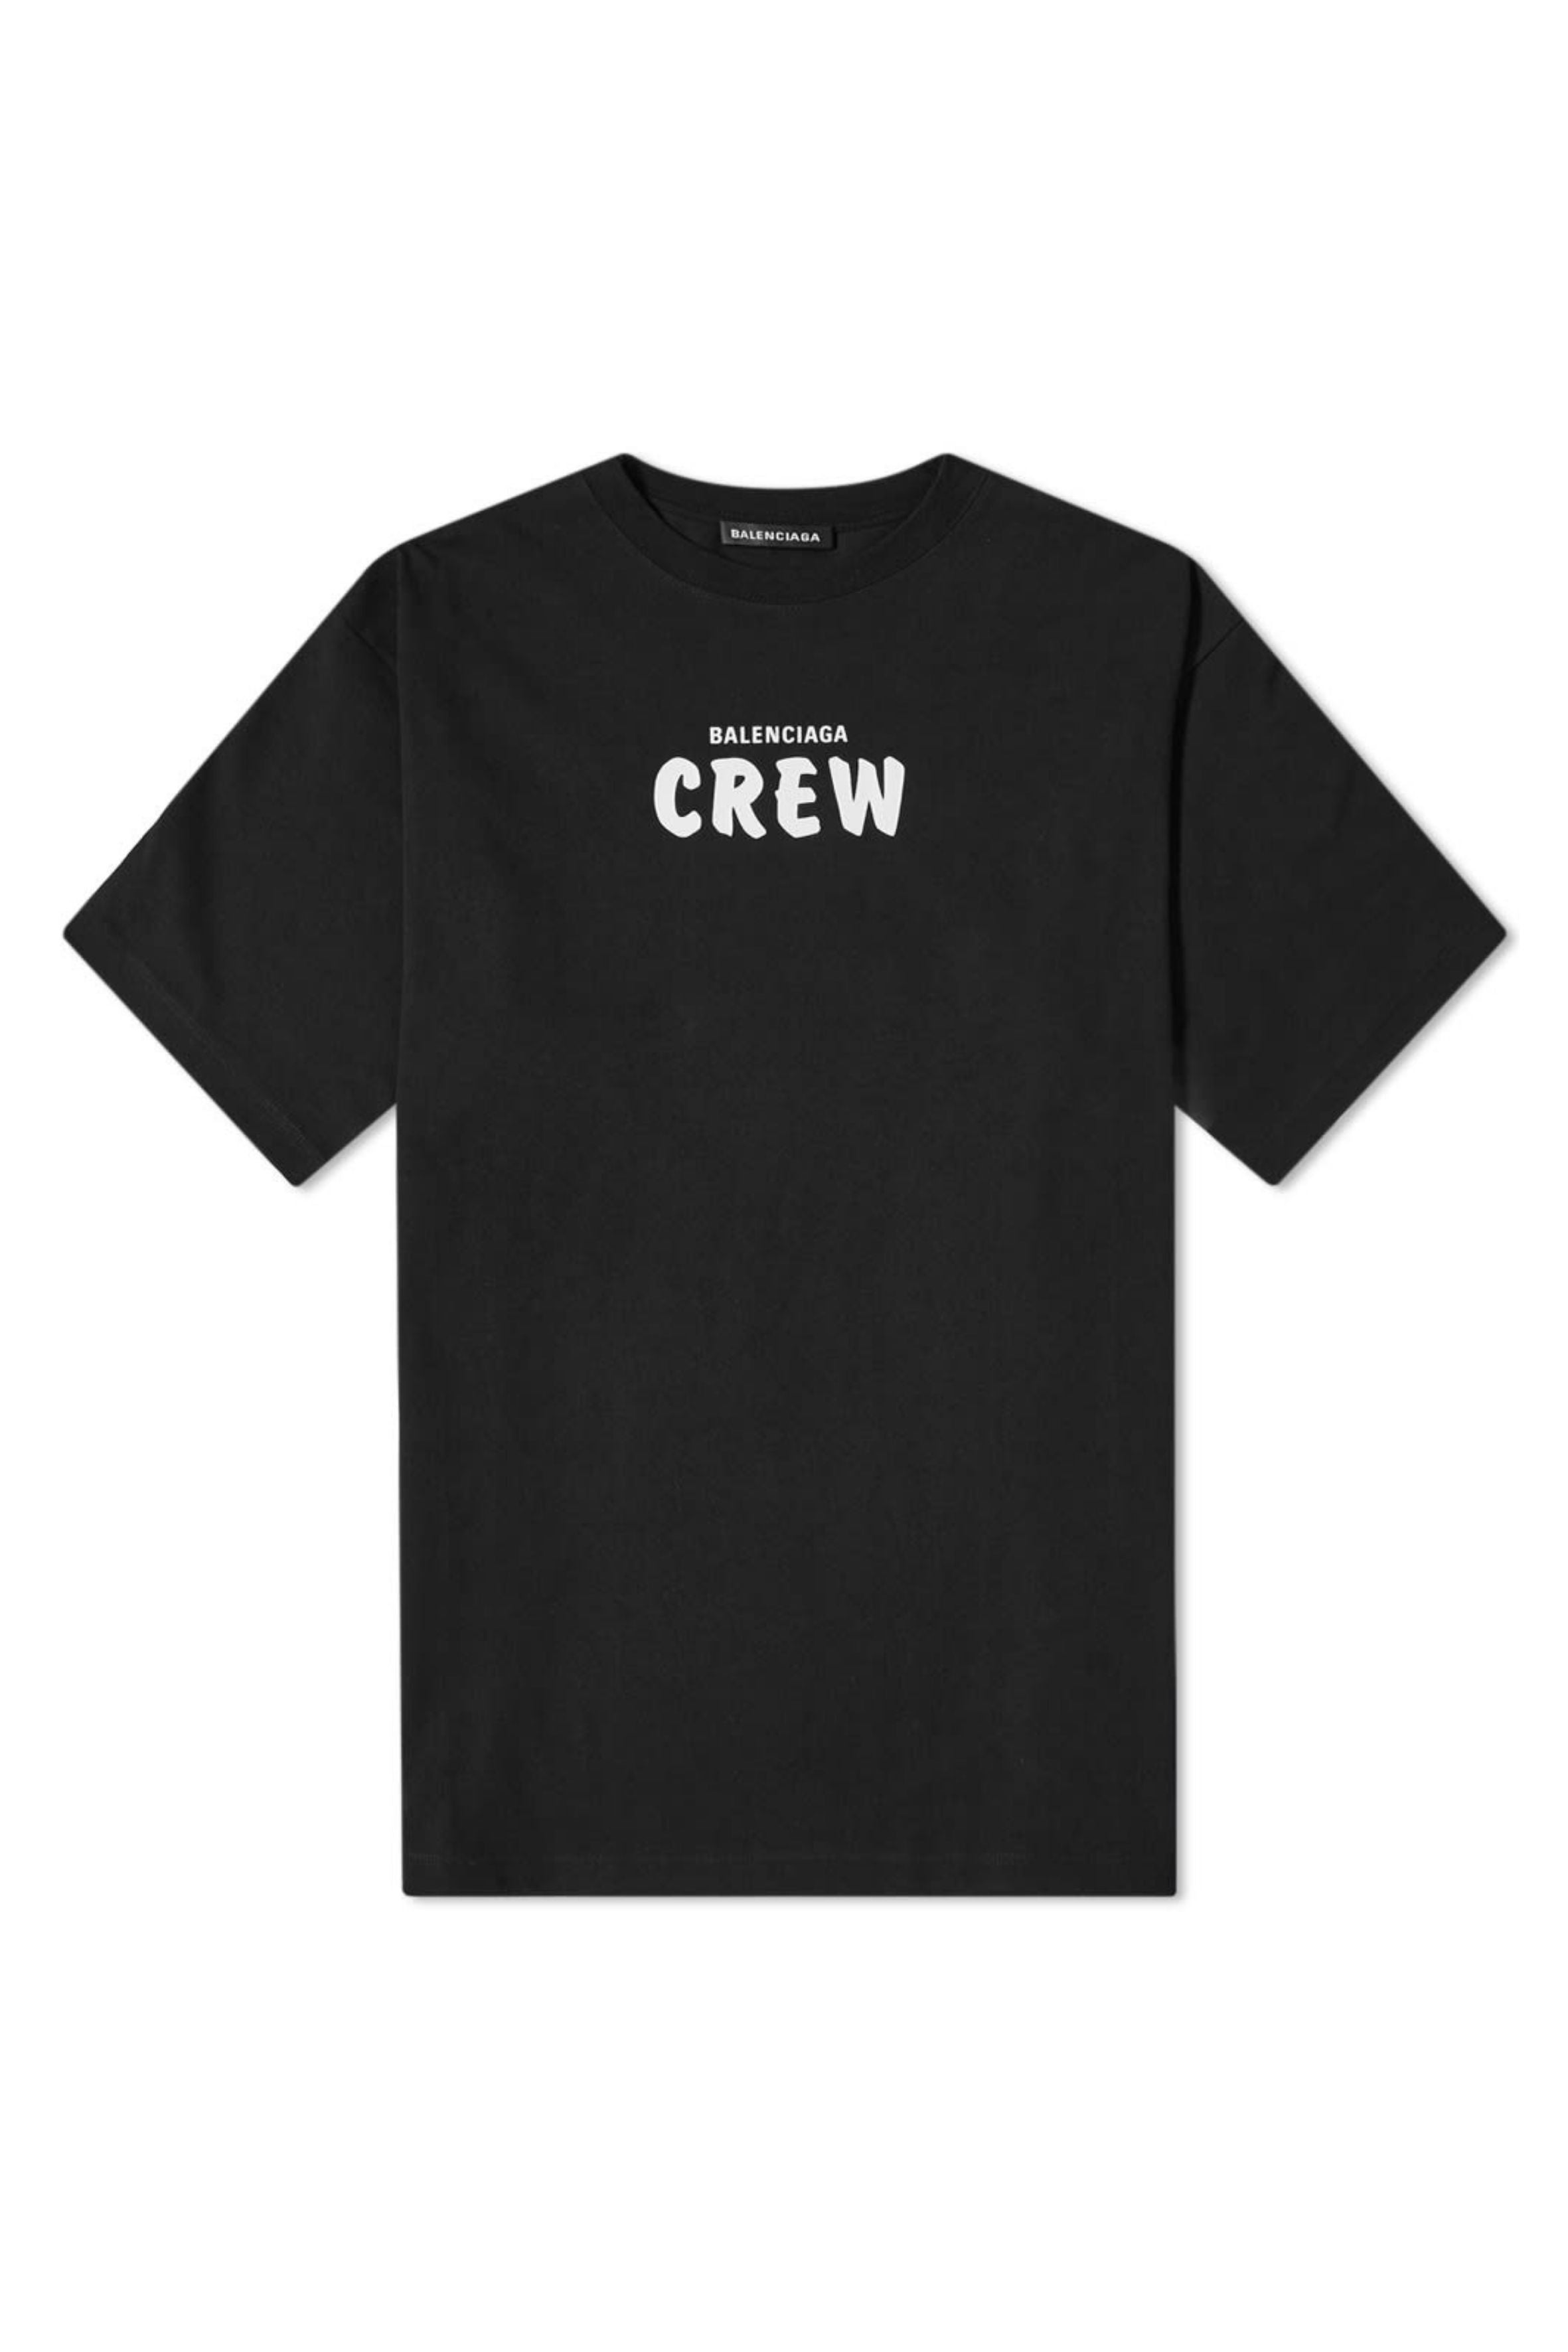 Balenciaga Crew Print Black Oversized T-shirt (Fits L)